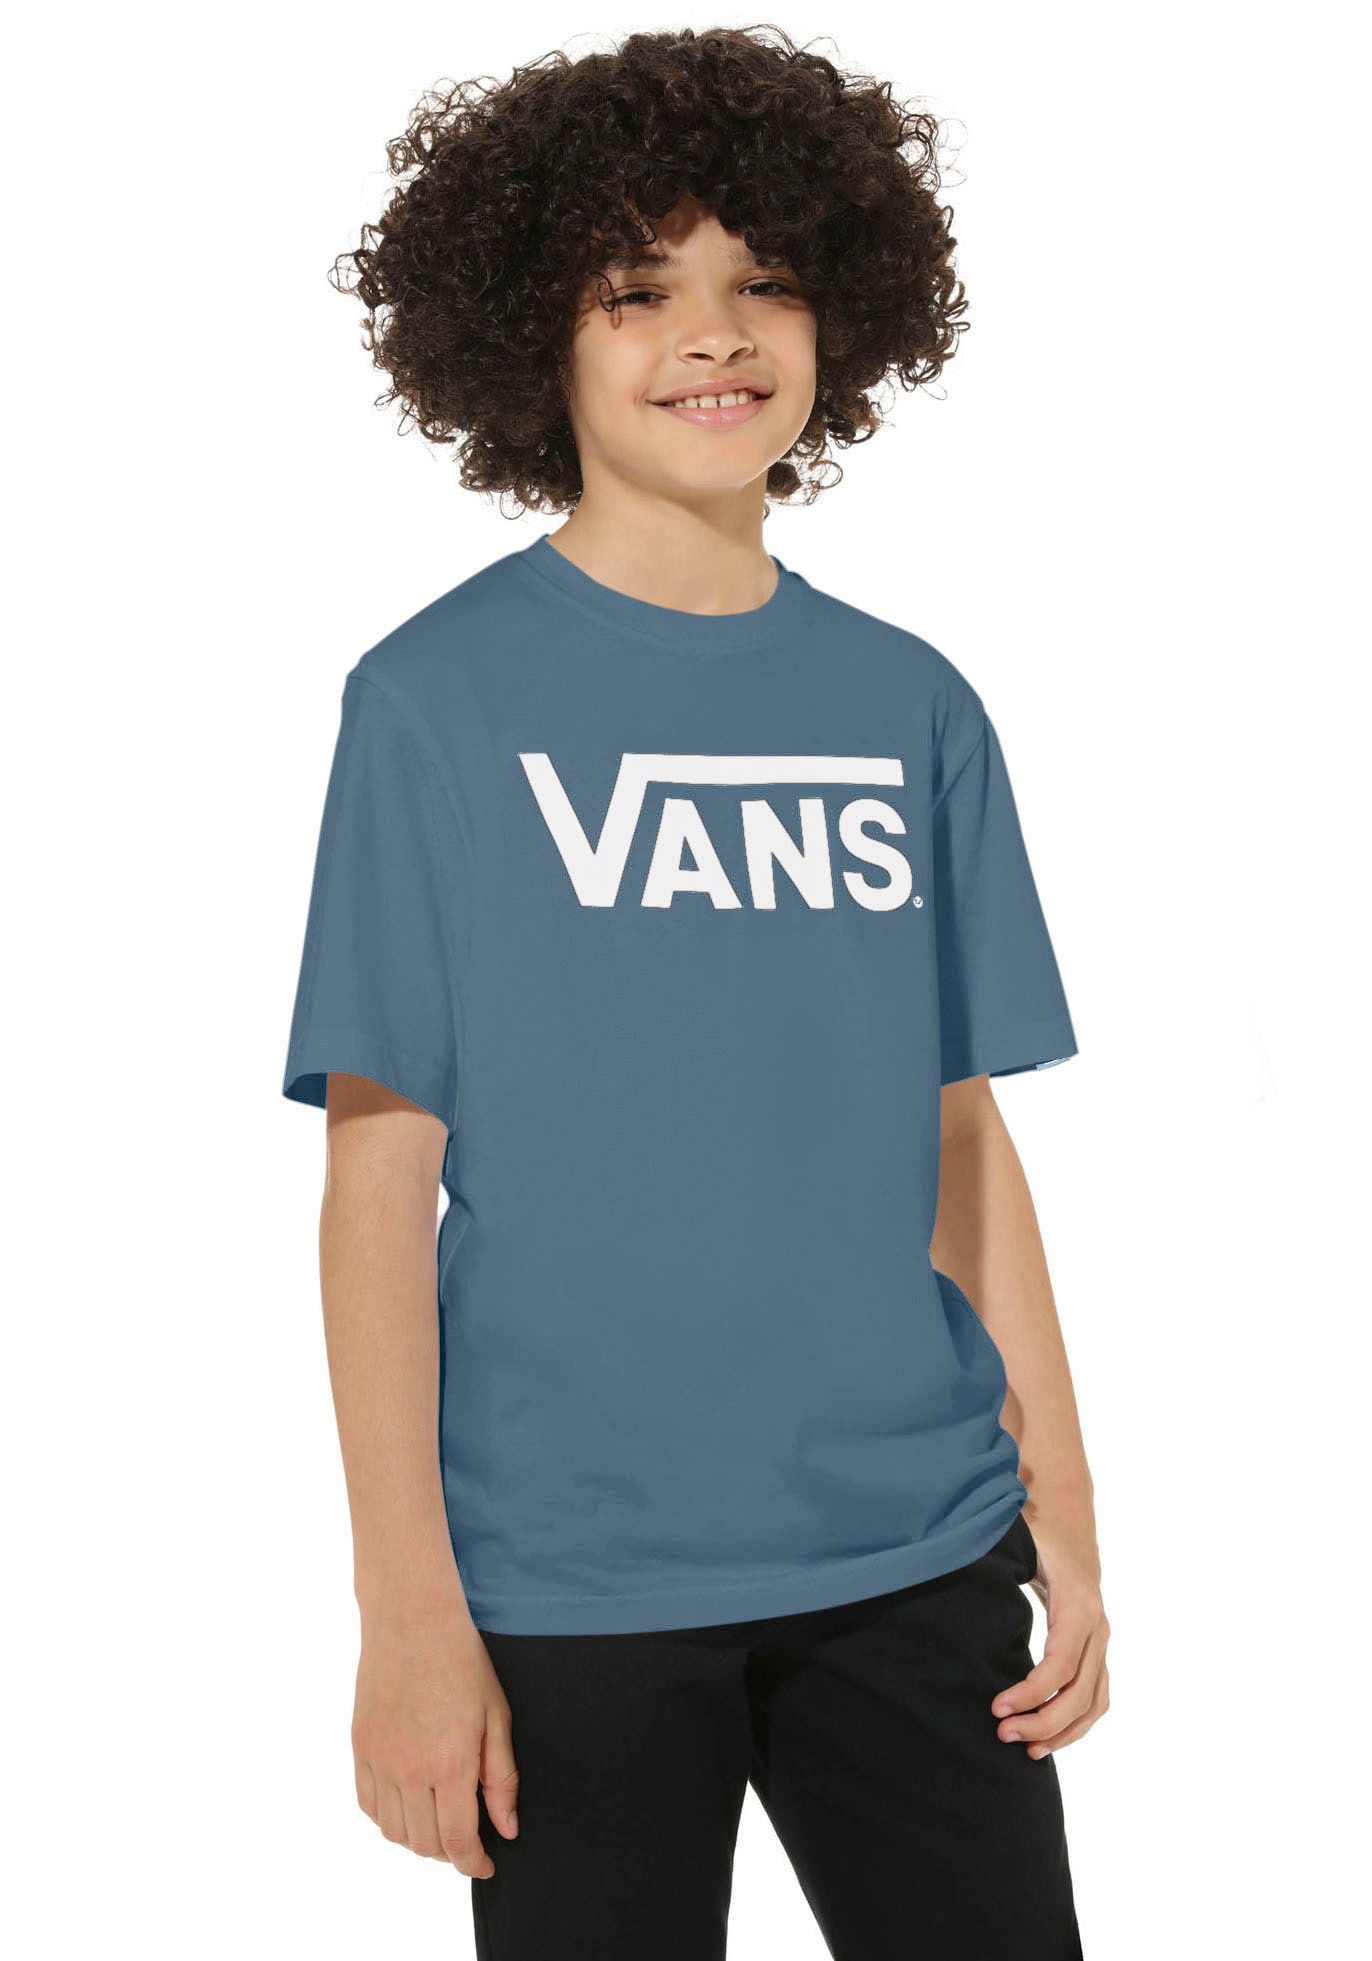 Vans T-Shirt »VANS CLASSIC BOYS« bestellen bei OTTO